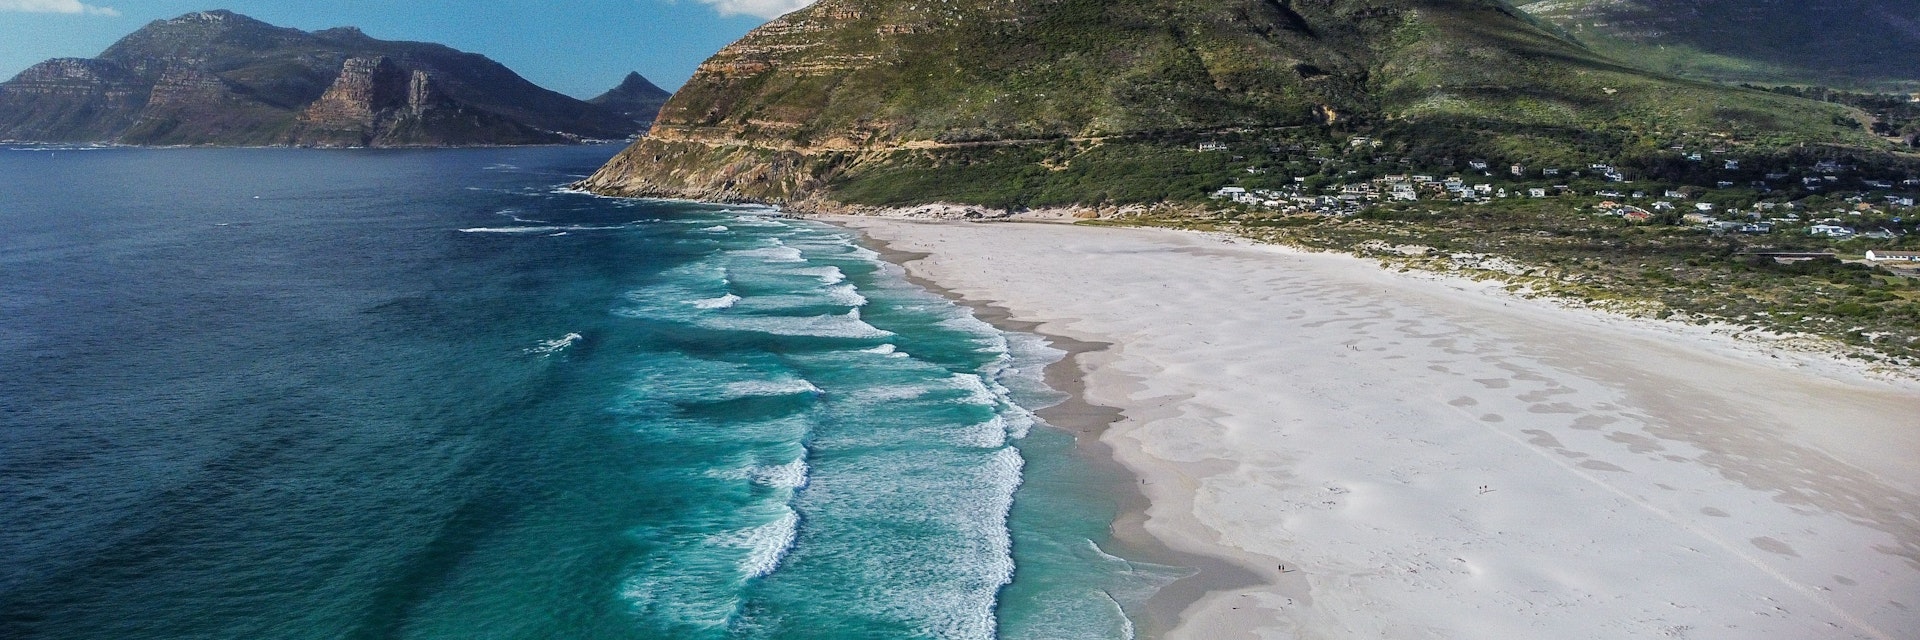 An aerial view of the beautiful Noordhoek Beach and Chapmans Peak in South Africa during summer
1445654367
chapmans peak, coastal, landscape, beautiful, vacation, coast, scenic, background, waves, seaside, outdoor, natural, aerial, top, skies